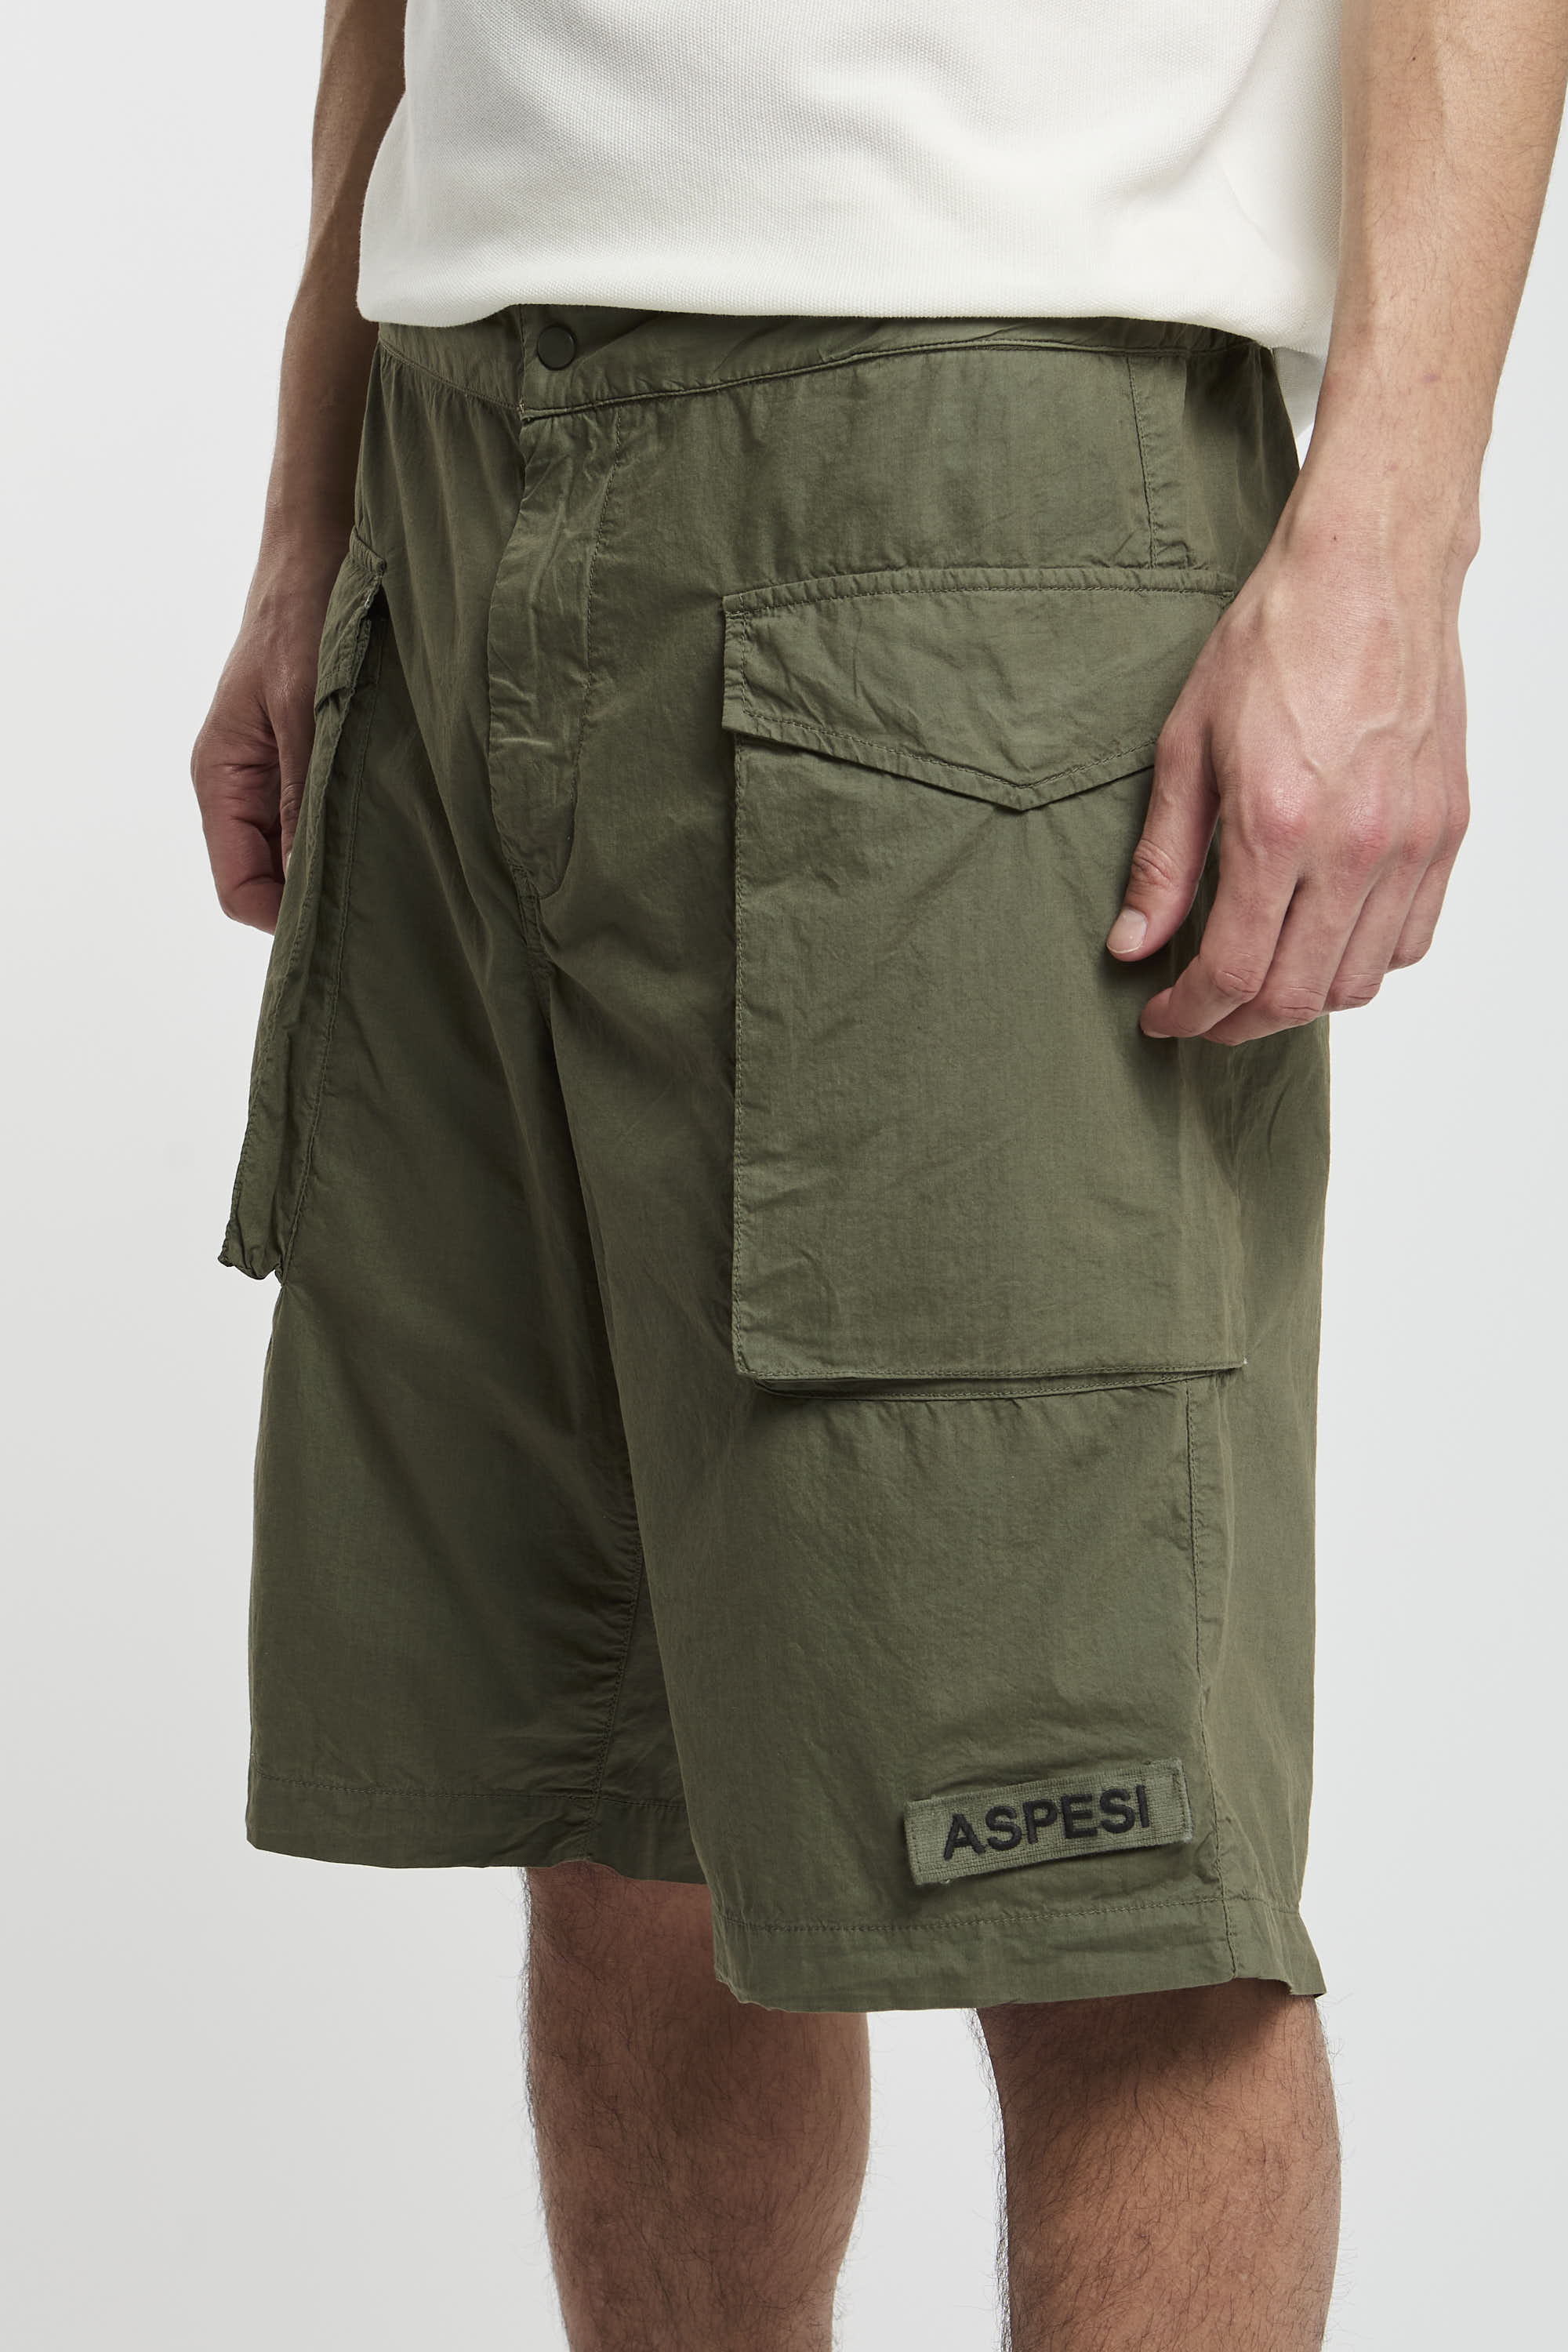 Aspesi Green Military Cotton Cargo Bermuda Shorts-1